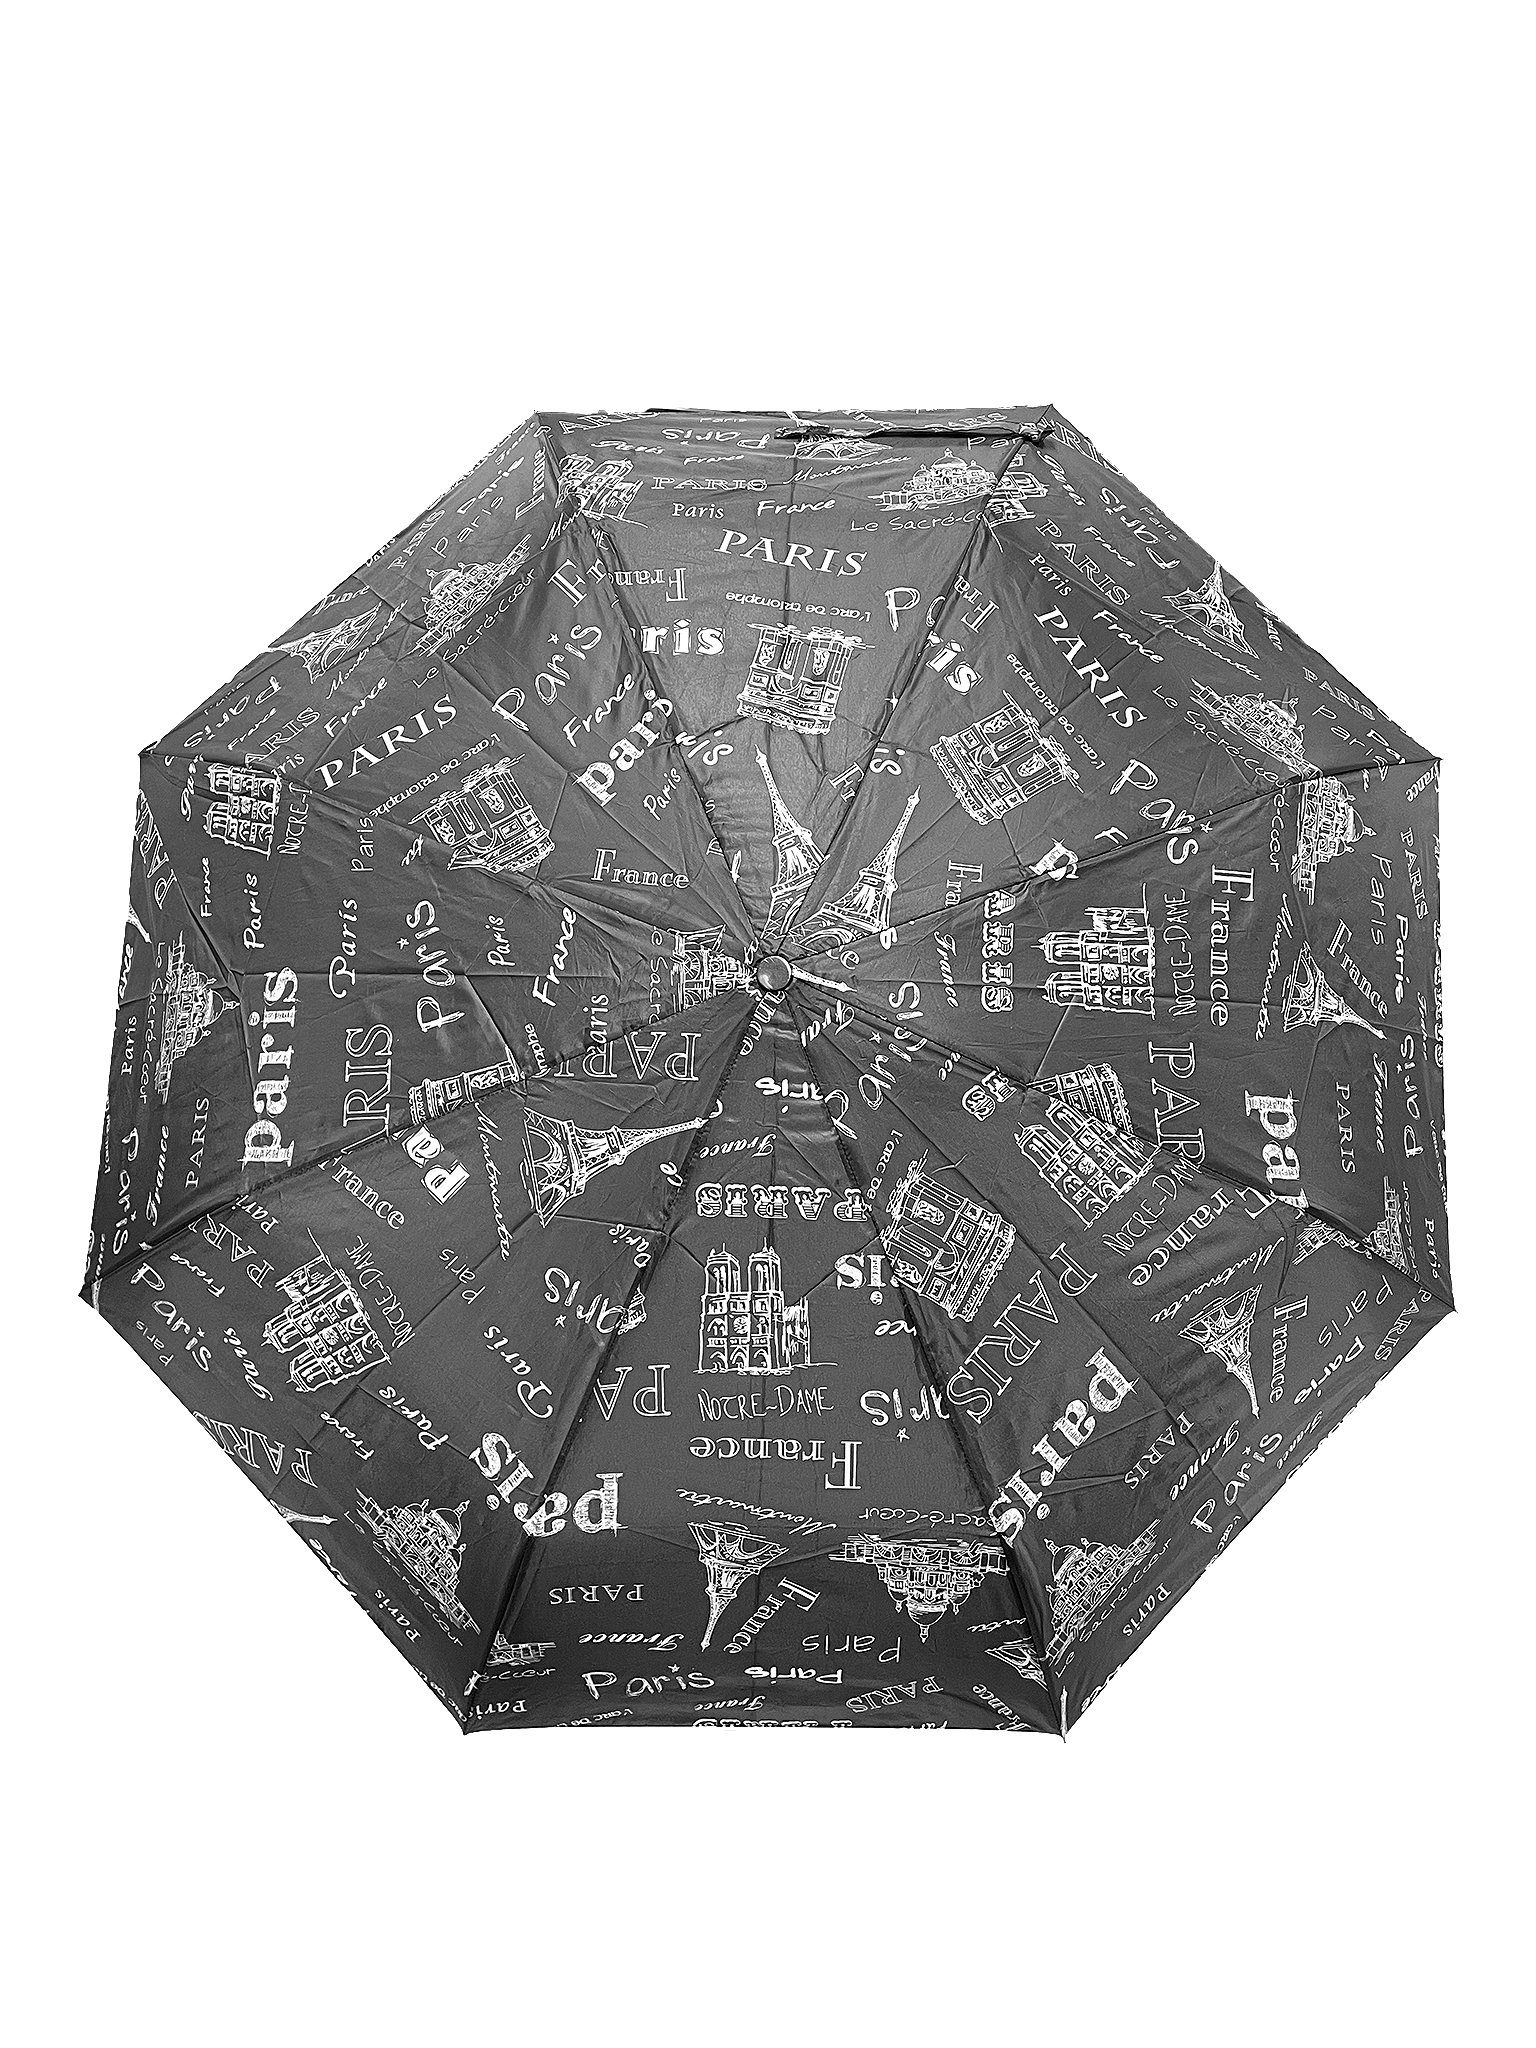 ANELY Taschenregenschirm Kleiner Paris Regenschirm Taschenschirm, 6746 Schwarz in Gemustert